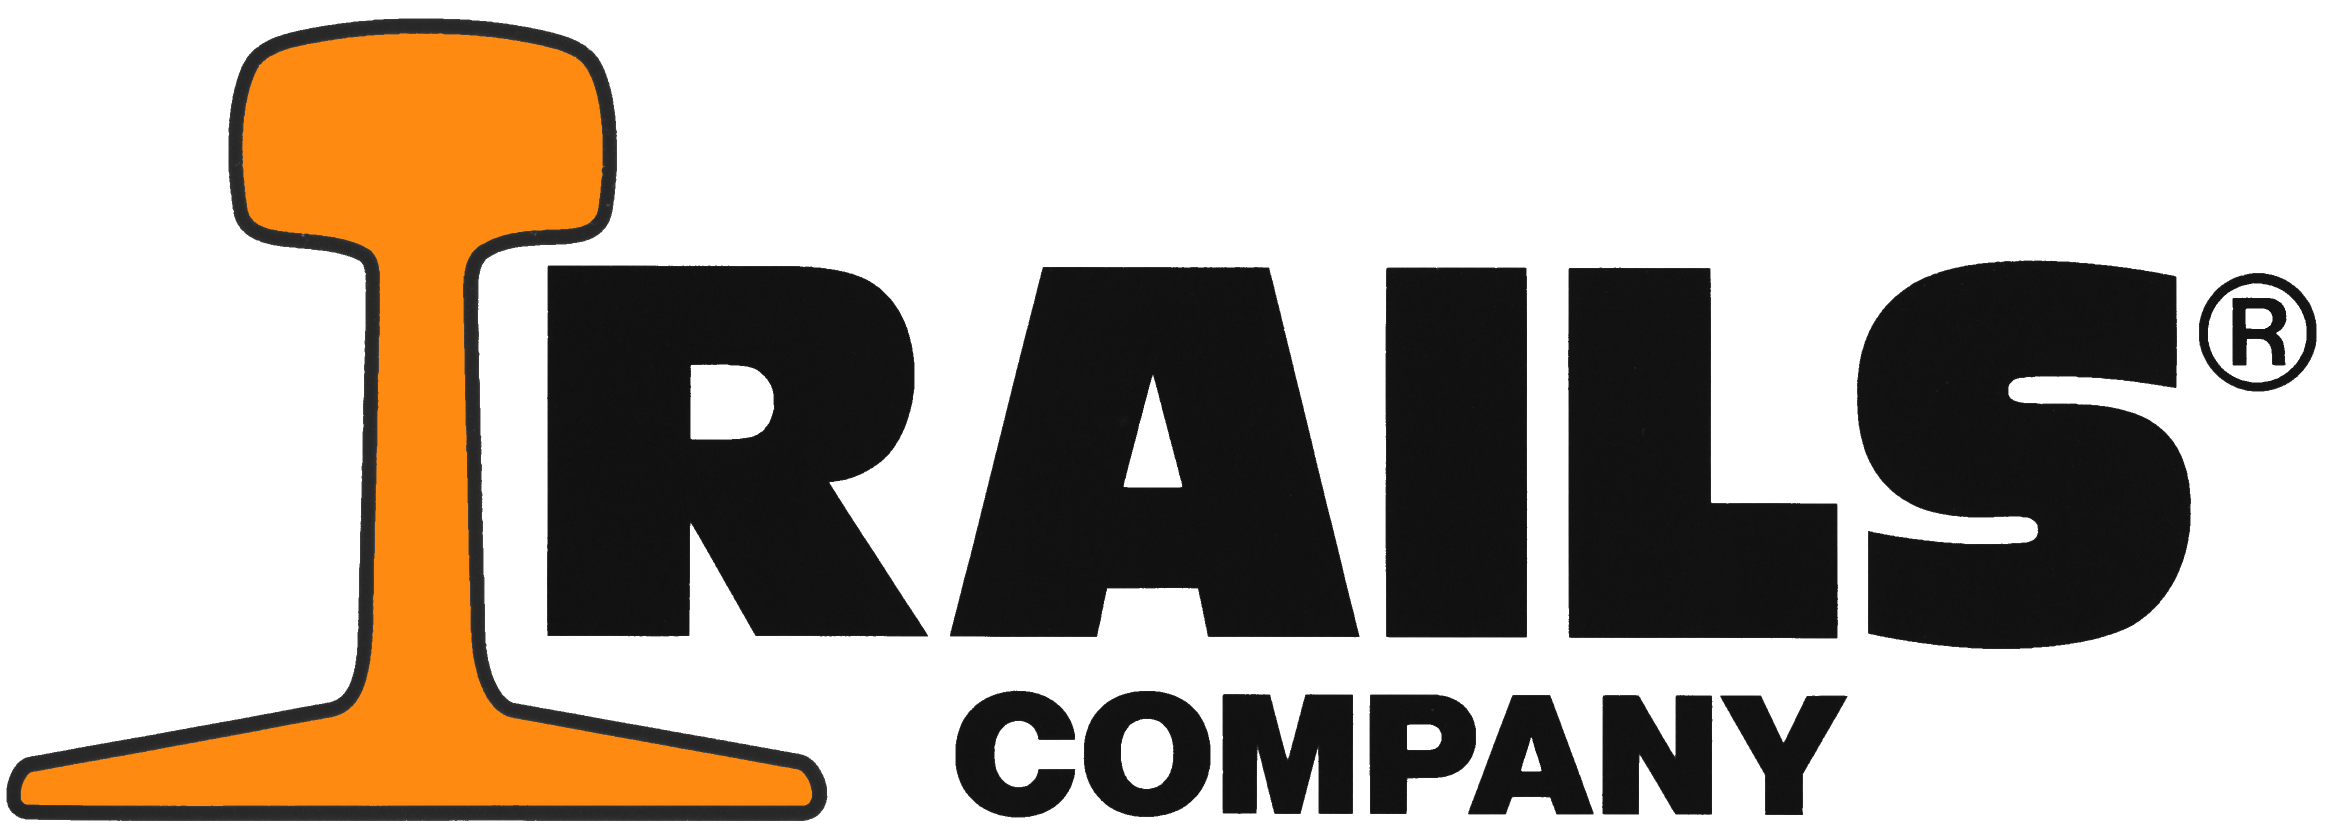 Railroad Company Logo - Rails Company - Railway Maintenance of Way and Signal Equipment Products